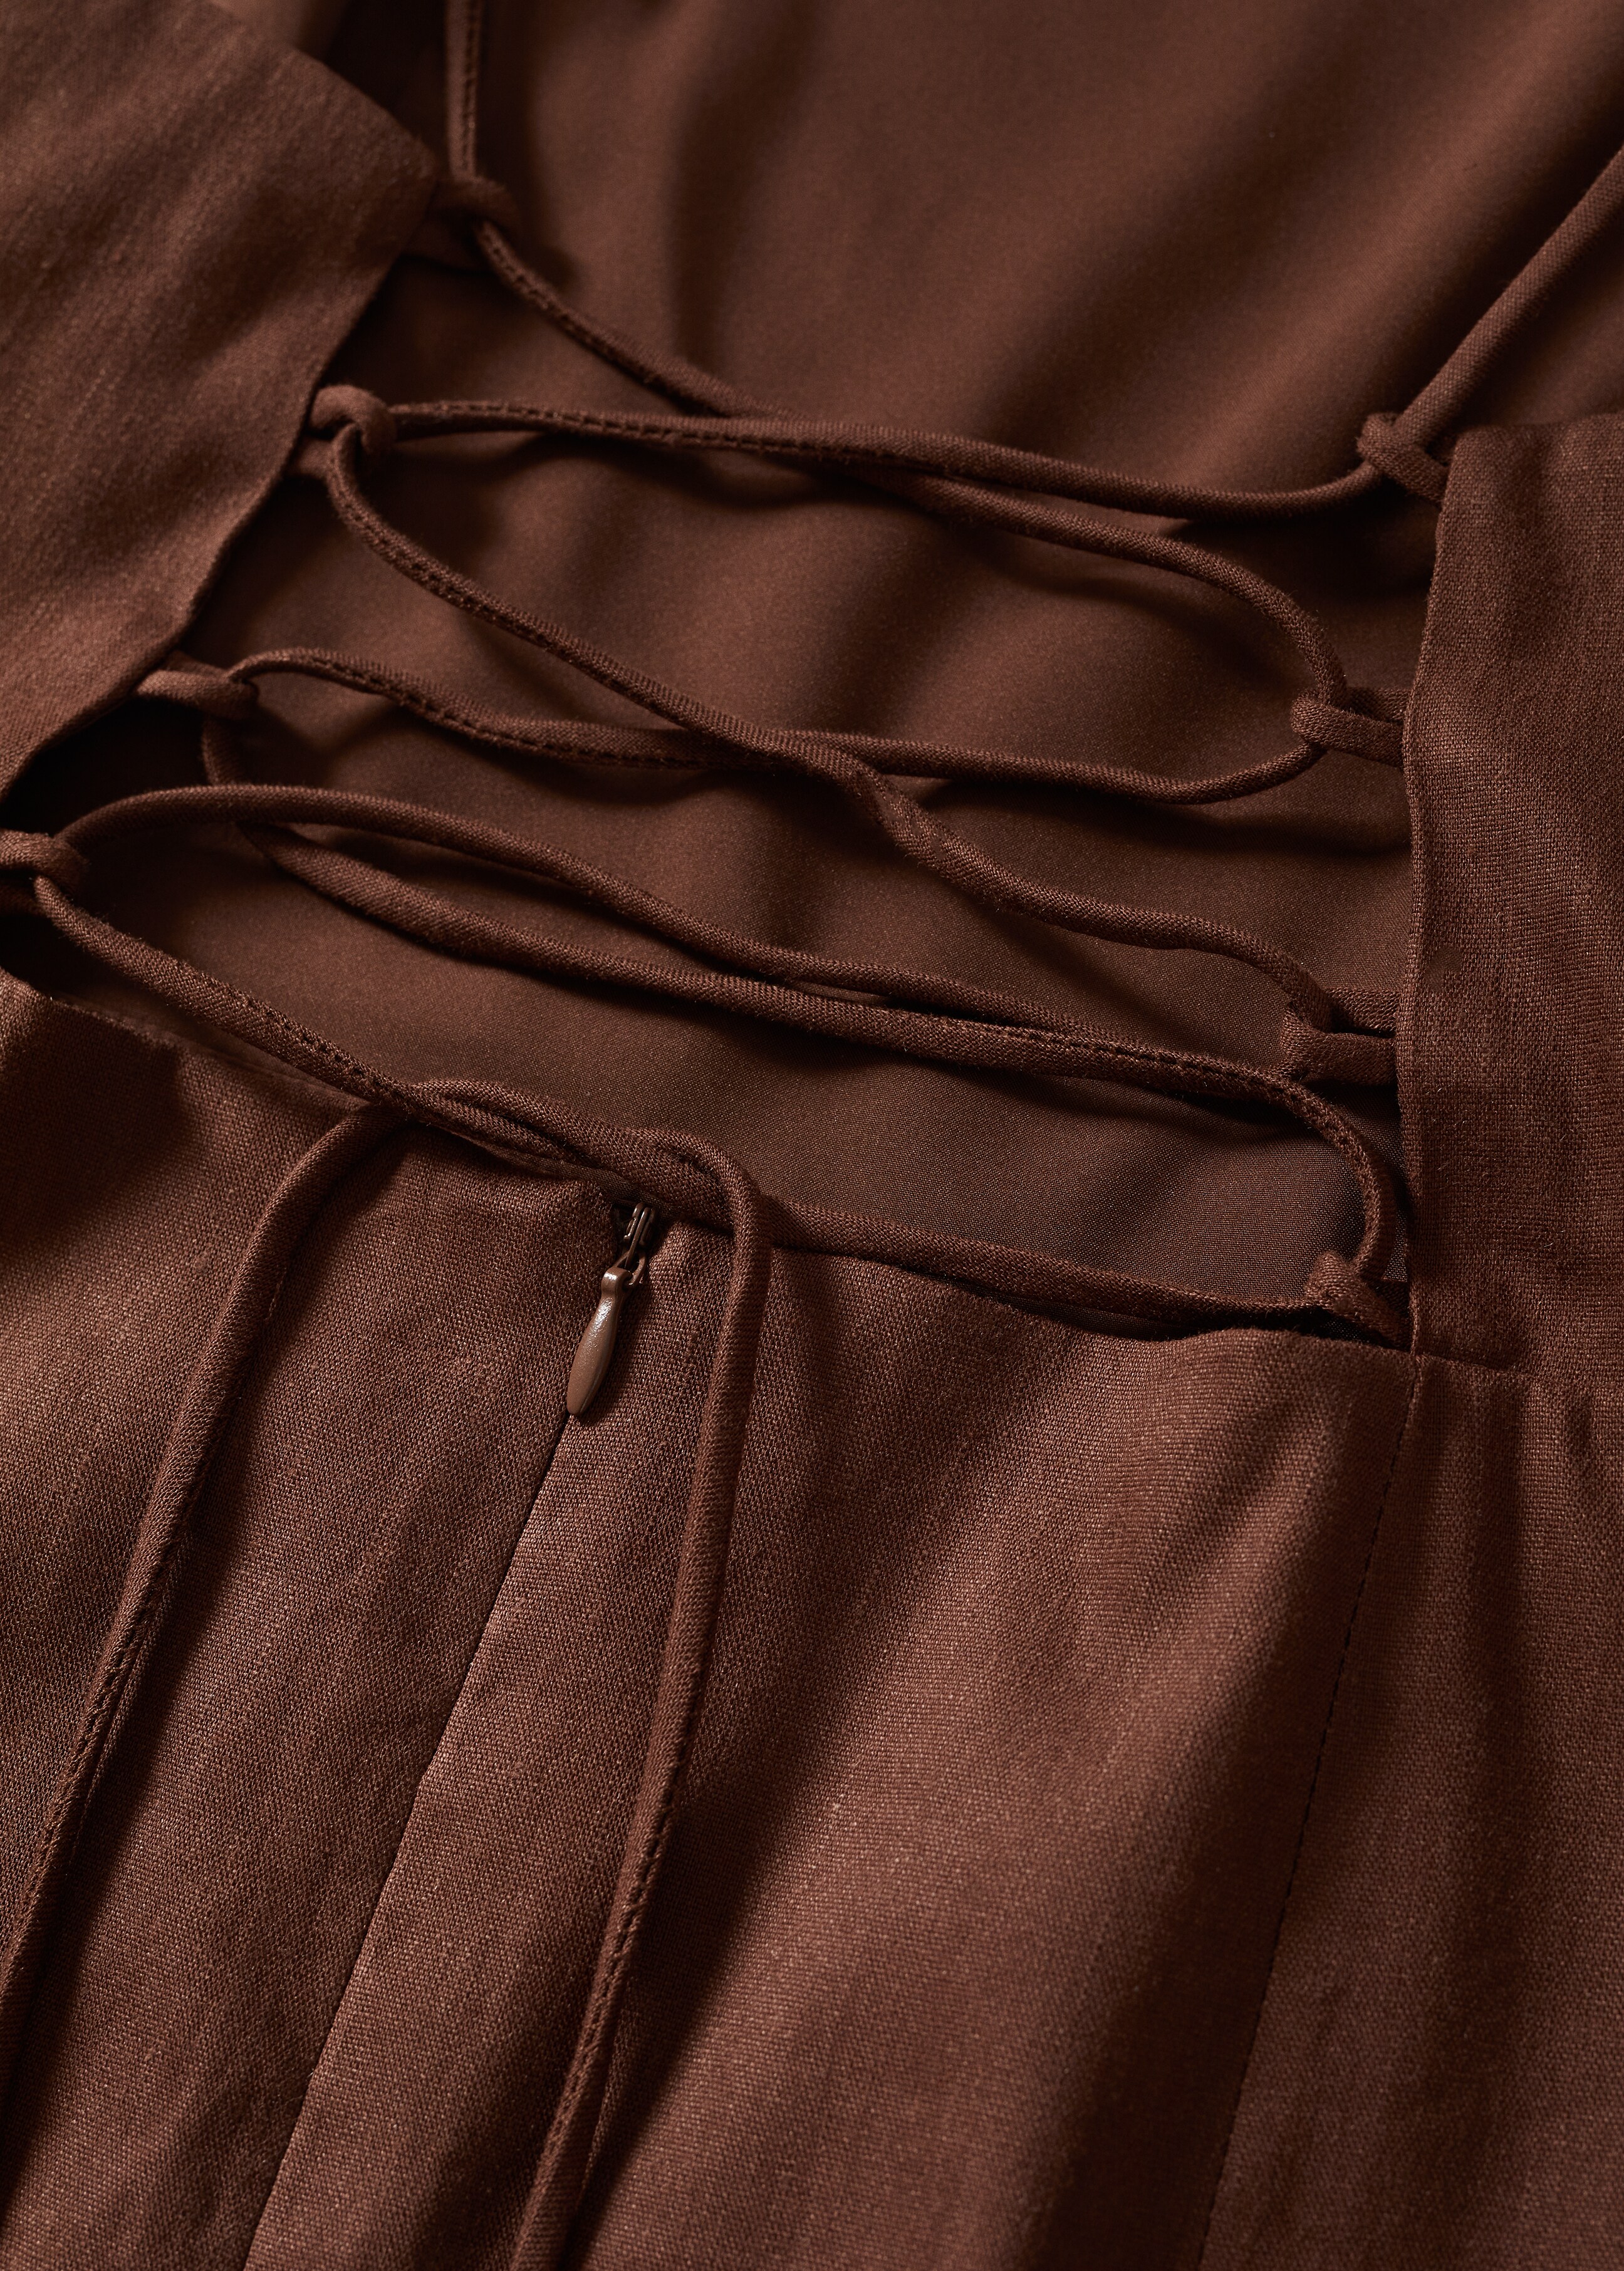 Linen strap dress - Details of the article 8